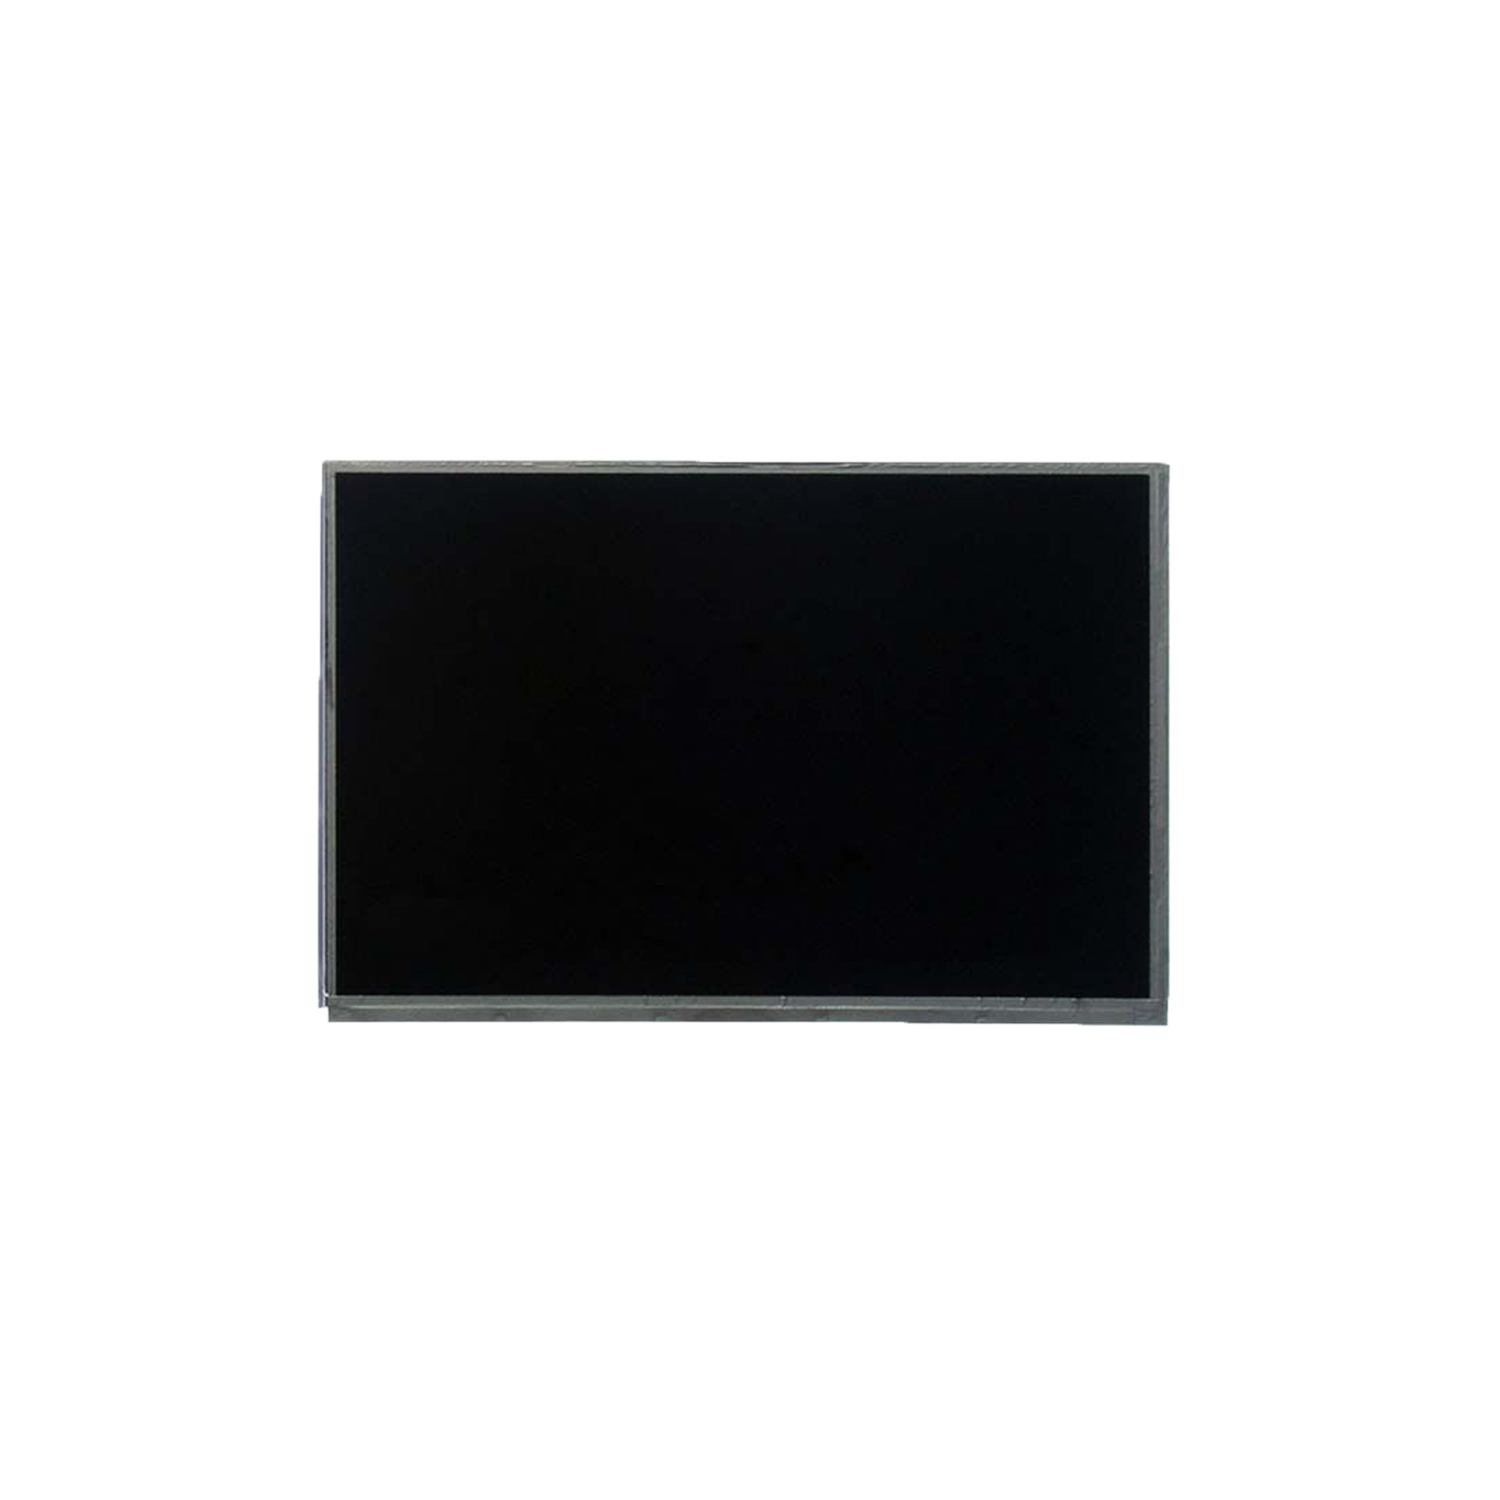 LCD Screen Only For Samsung Galaxy Tab 2 10.1 (P5100/P5110/P5113) / Tab 3 10.1 (P5200) / Tab 4 10.1 (T530/T531/T535)